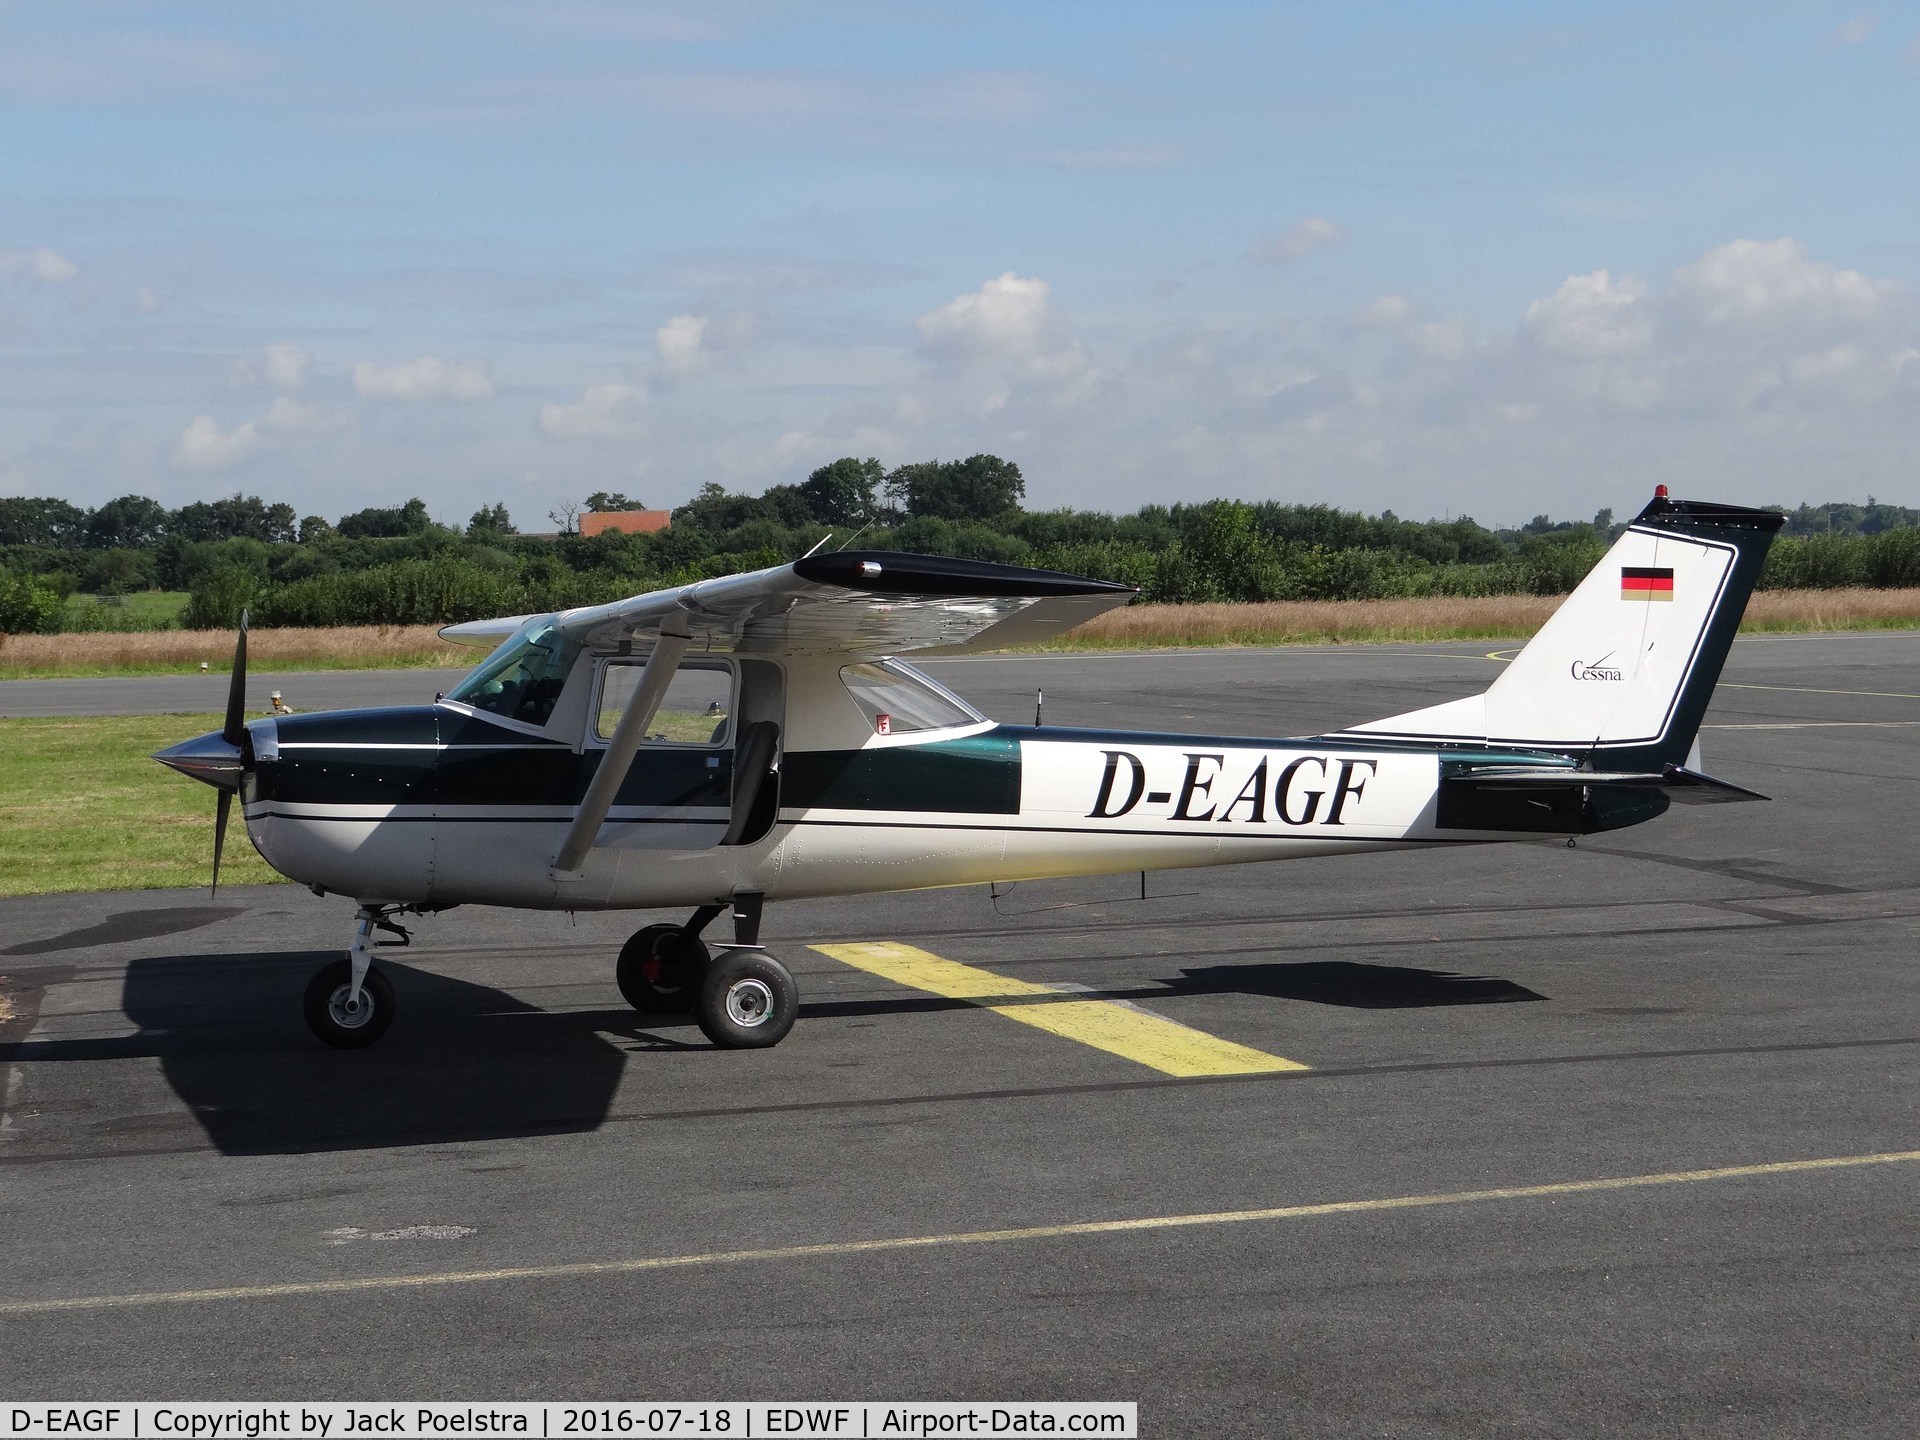 D-EAGF, 1962 Cessna 150F C/N 150-3628, D-EAGF at Leer-Papenburg airport